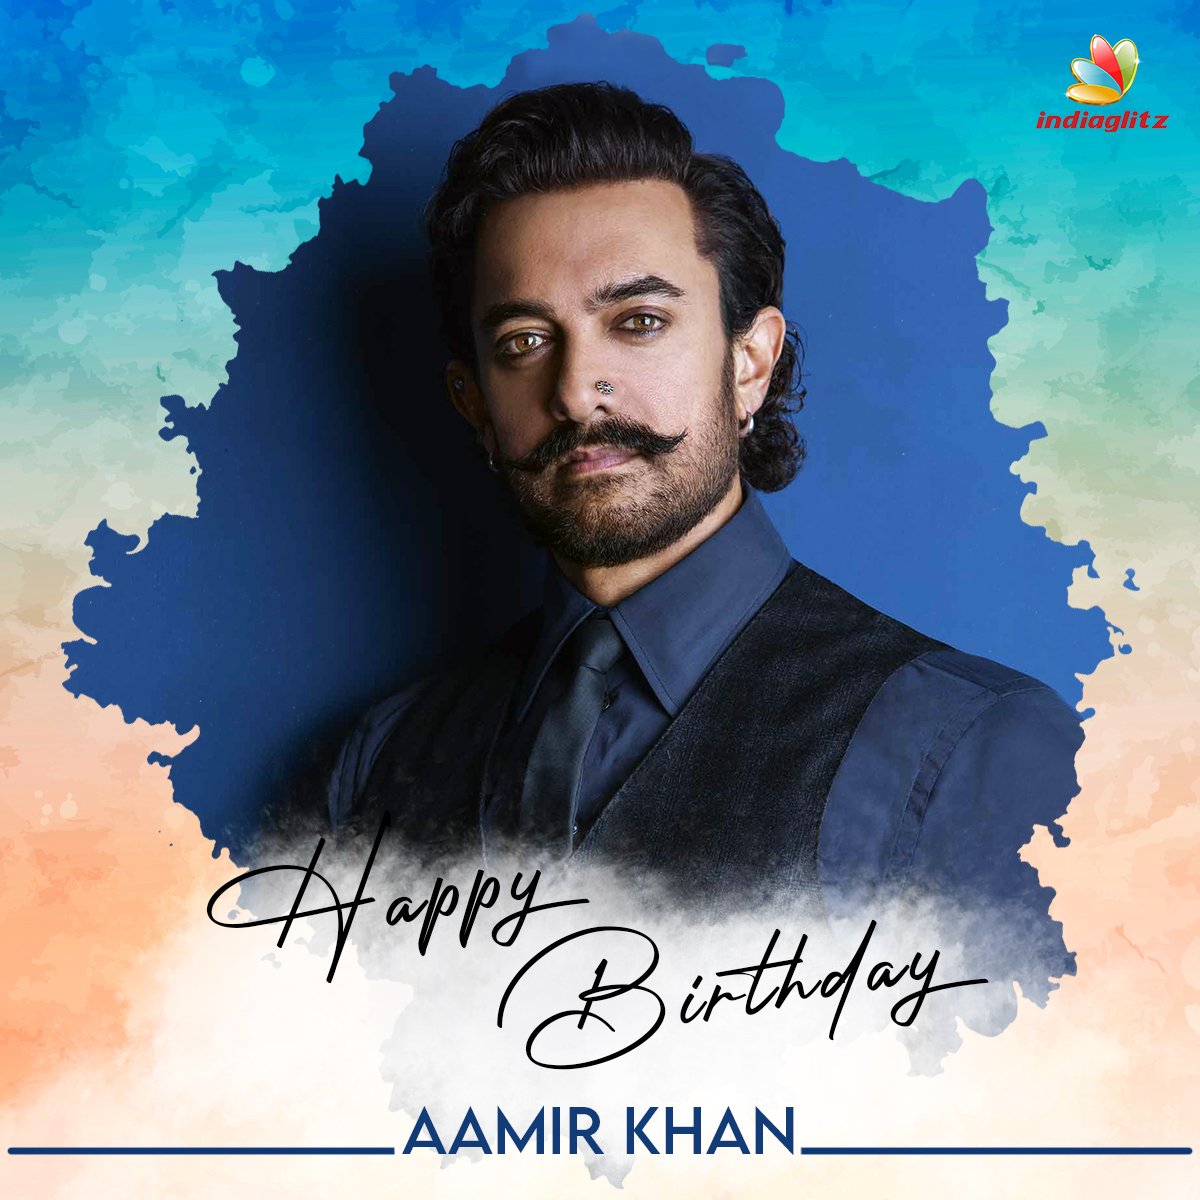 Wishing Actor Aamir Khan a Very Happy Birthday   